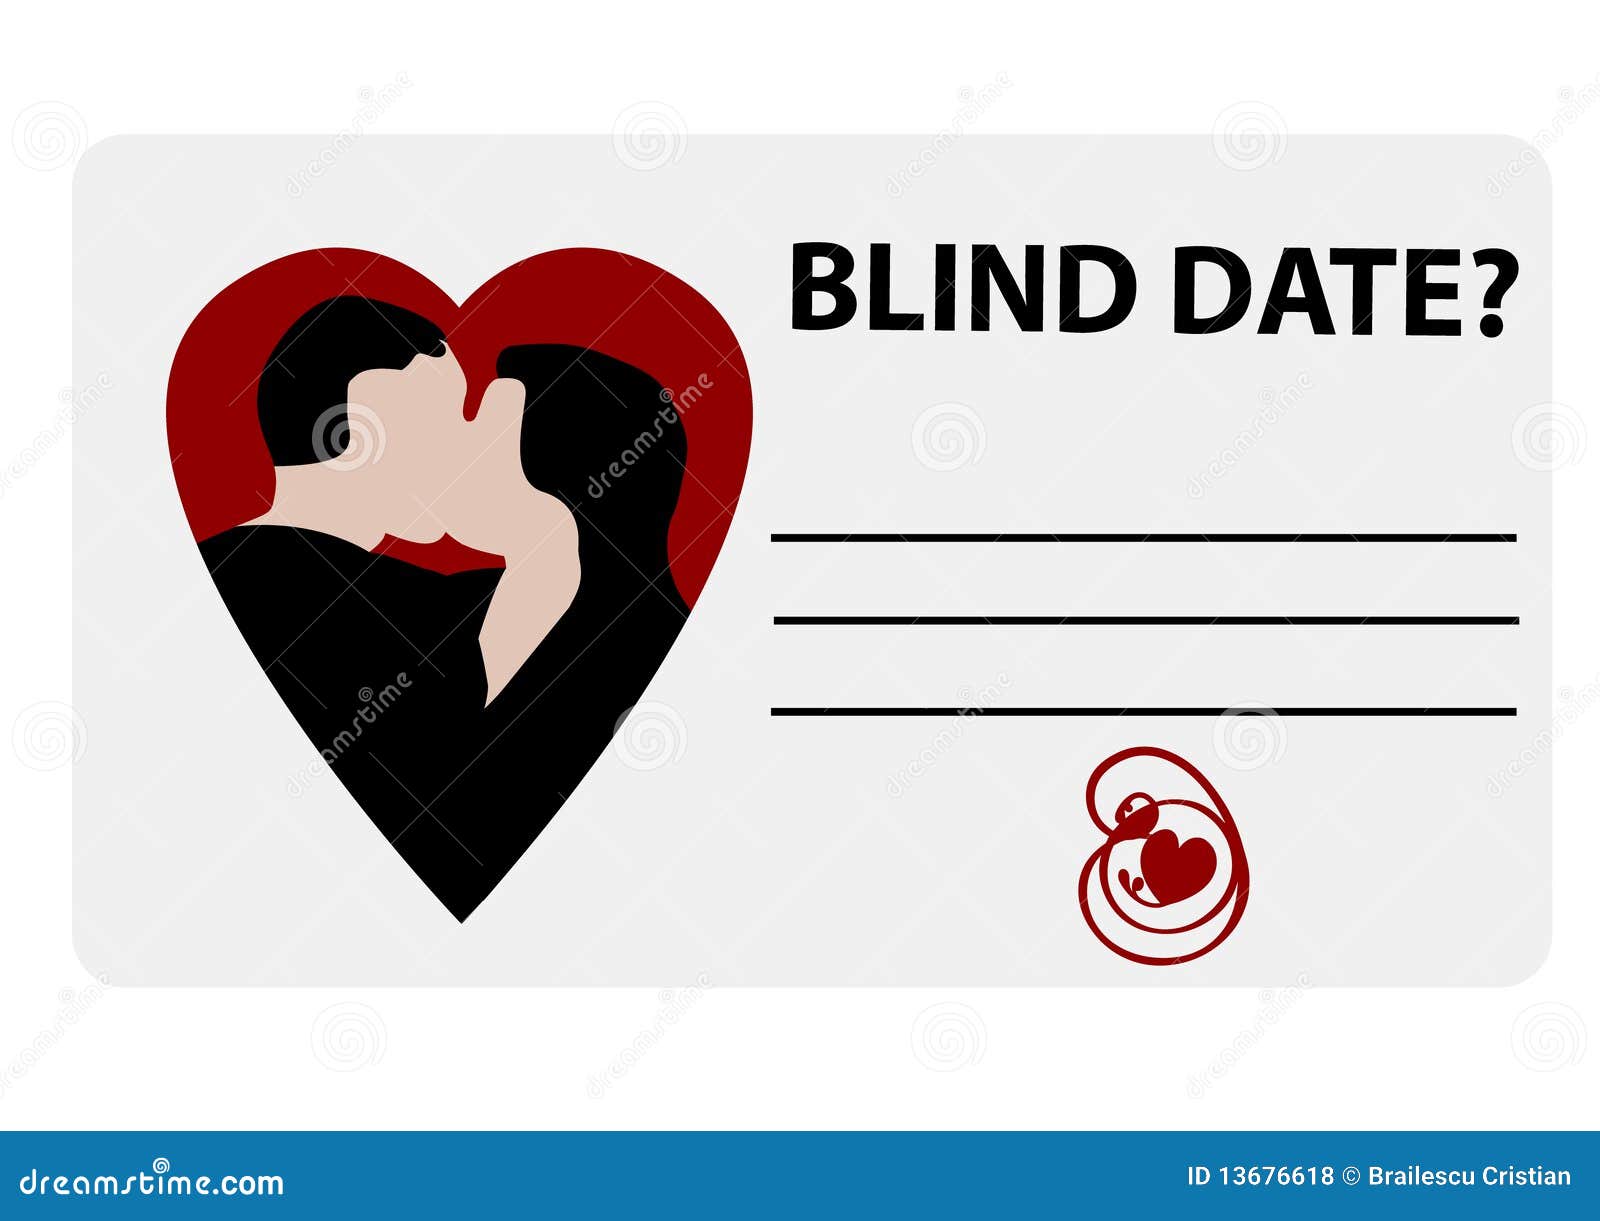 Blind Date - Sample Essay